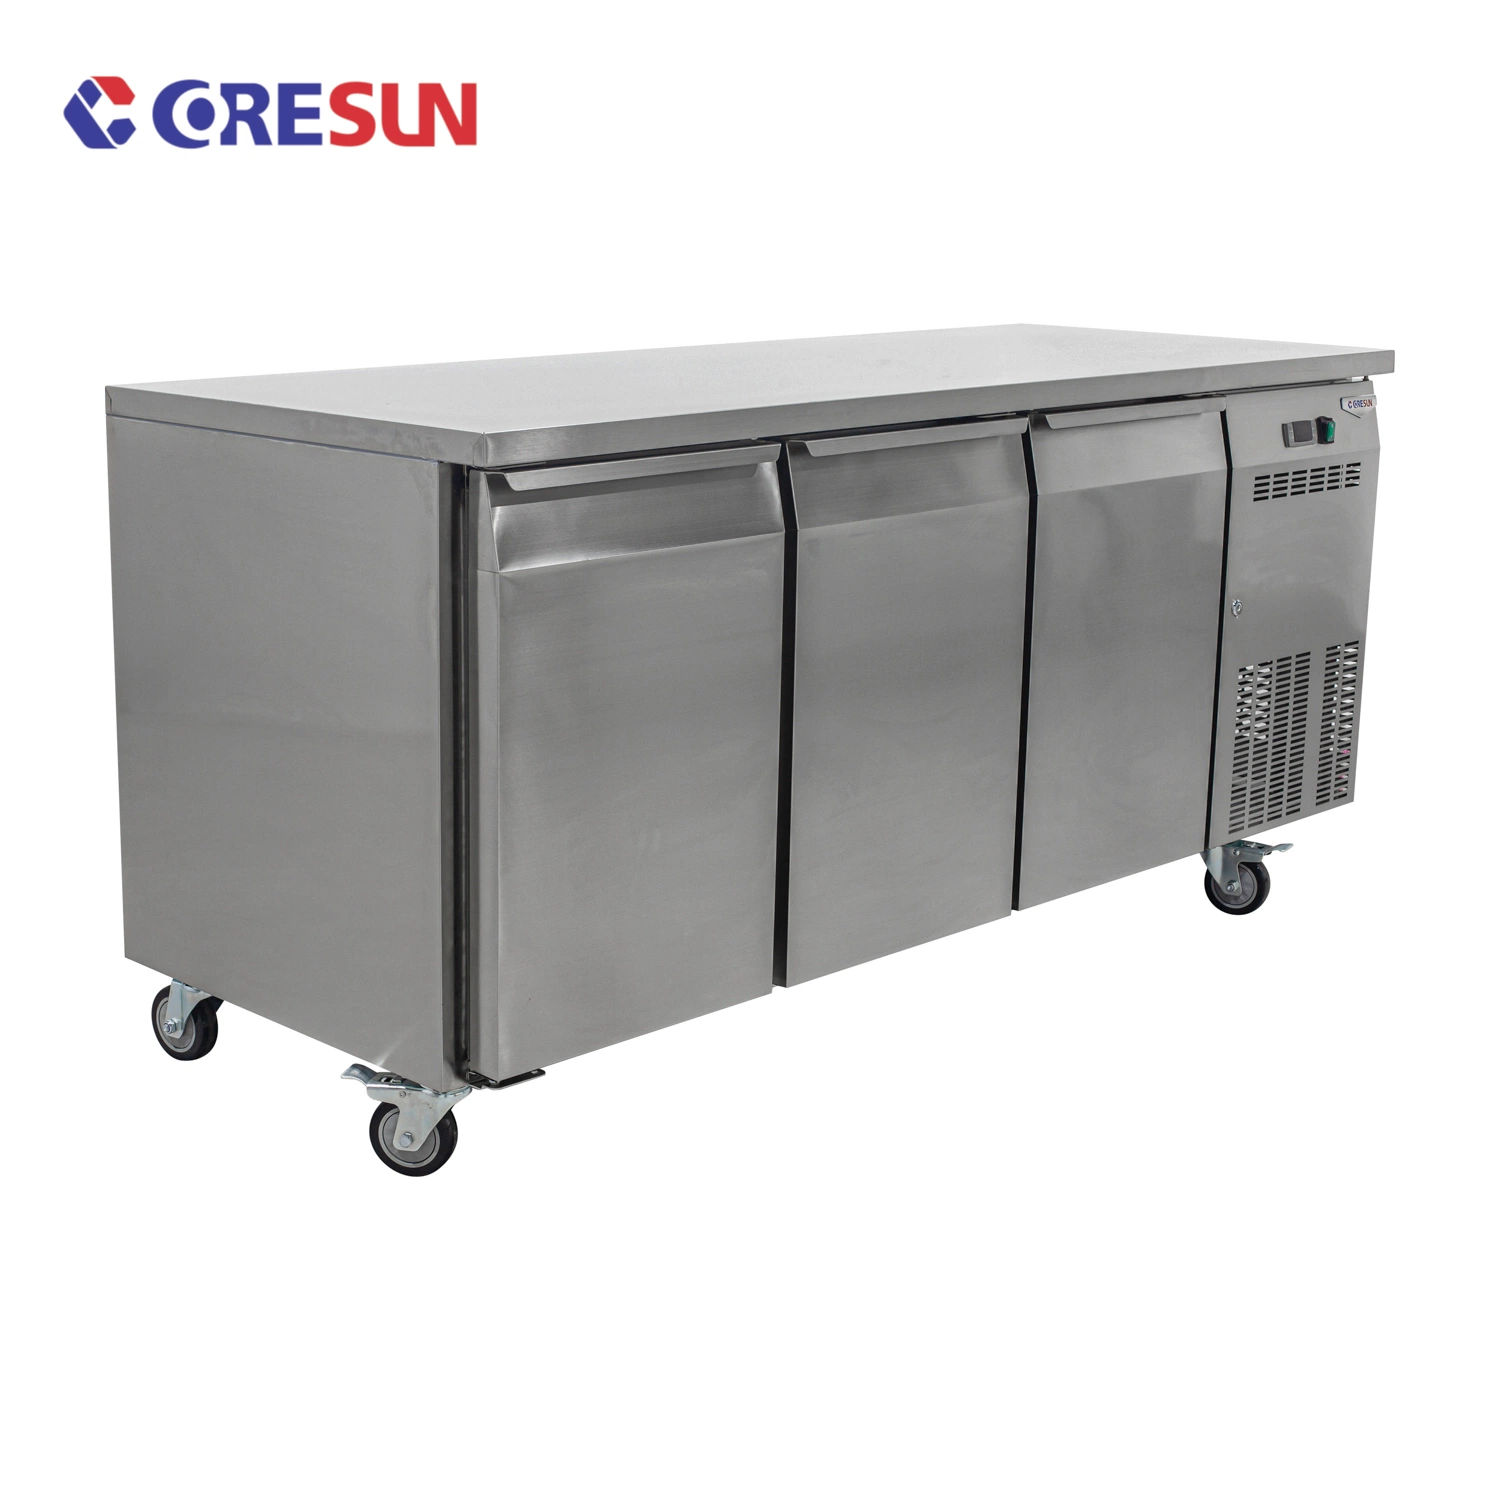 Three Doors Refrigeration Equipment Stainless Steel Workbench Worktable Freezer Undercounter Freezer Refrigerator